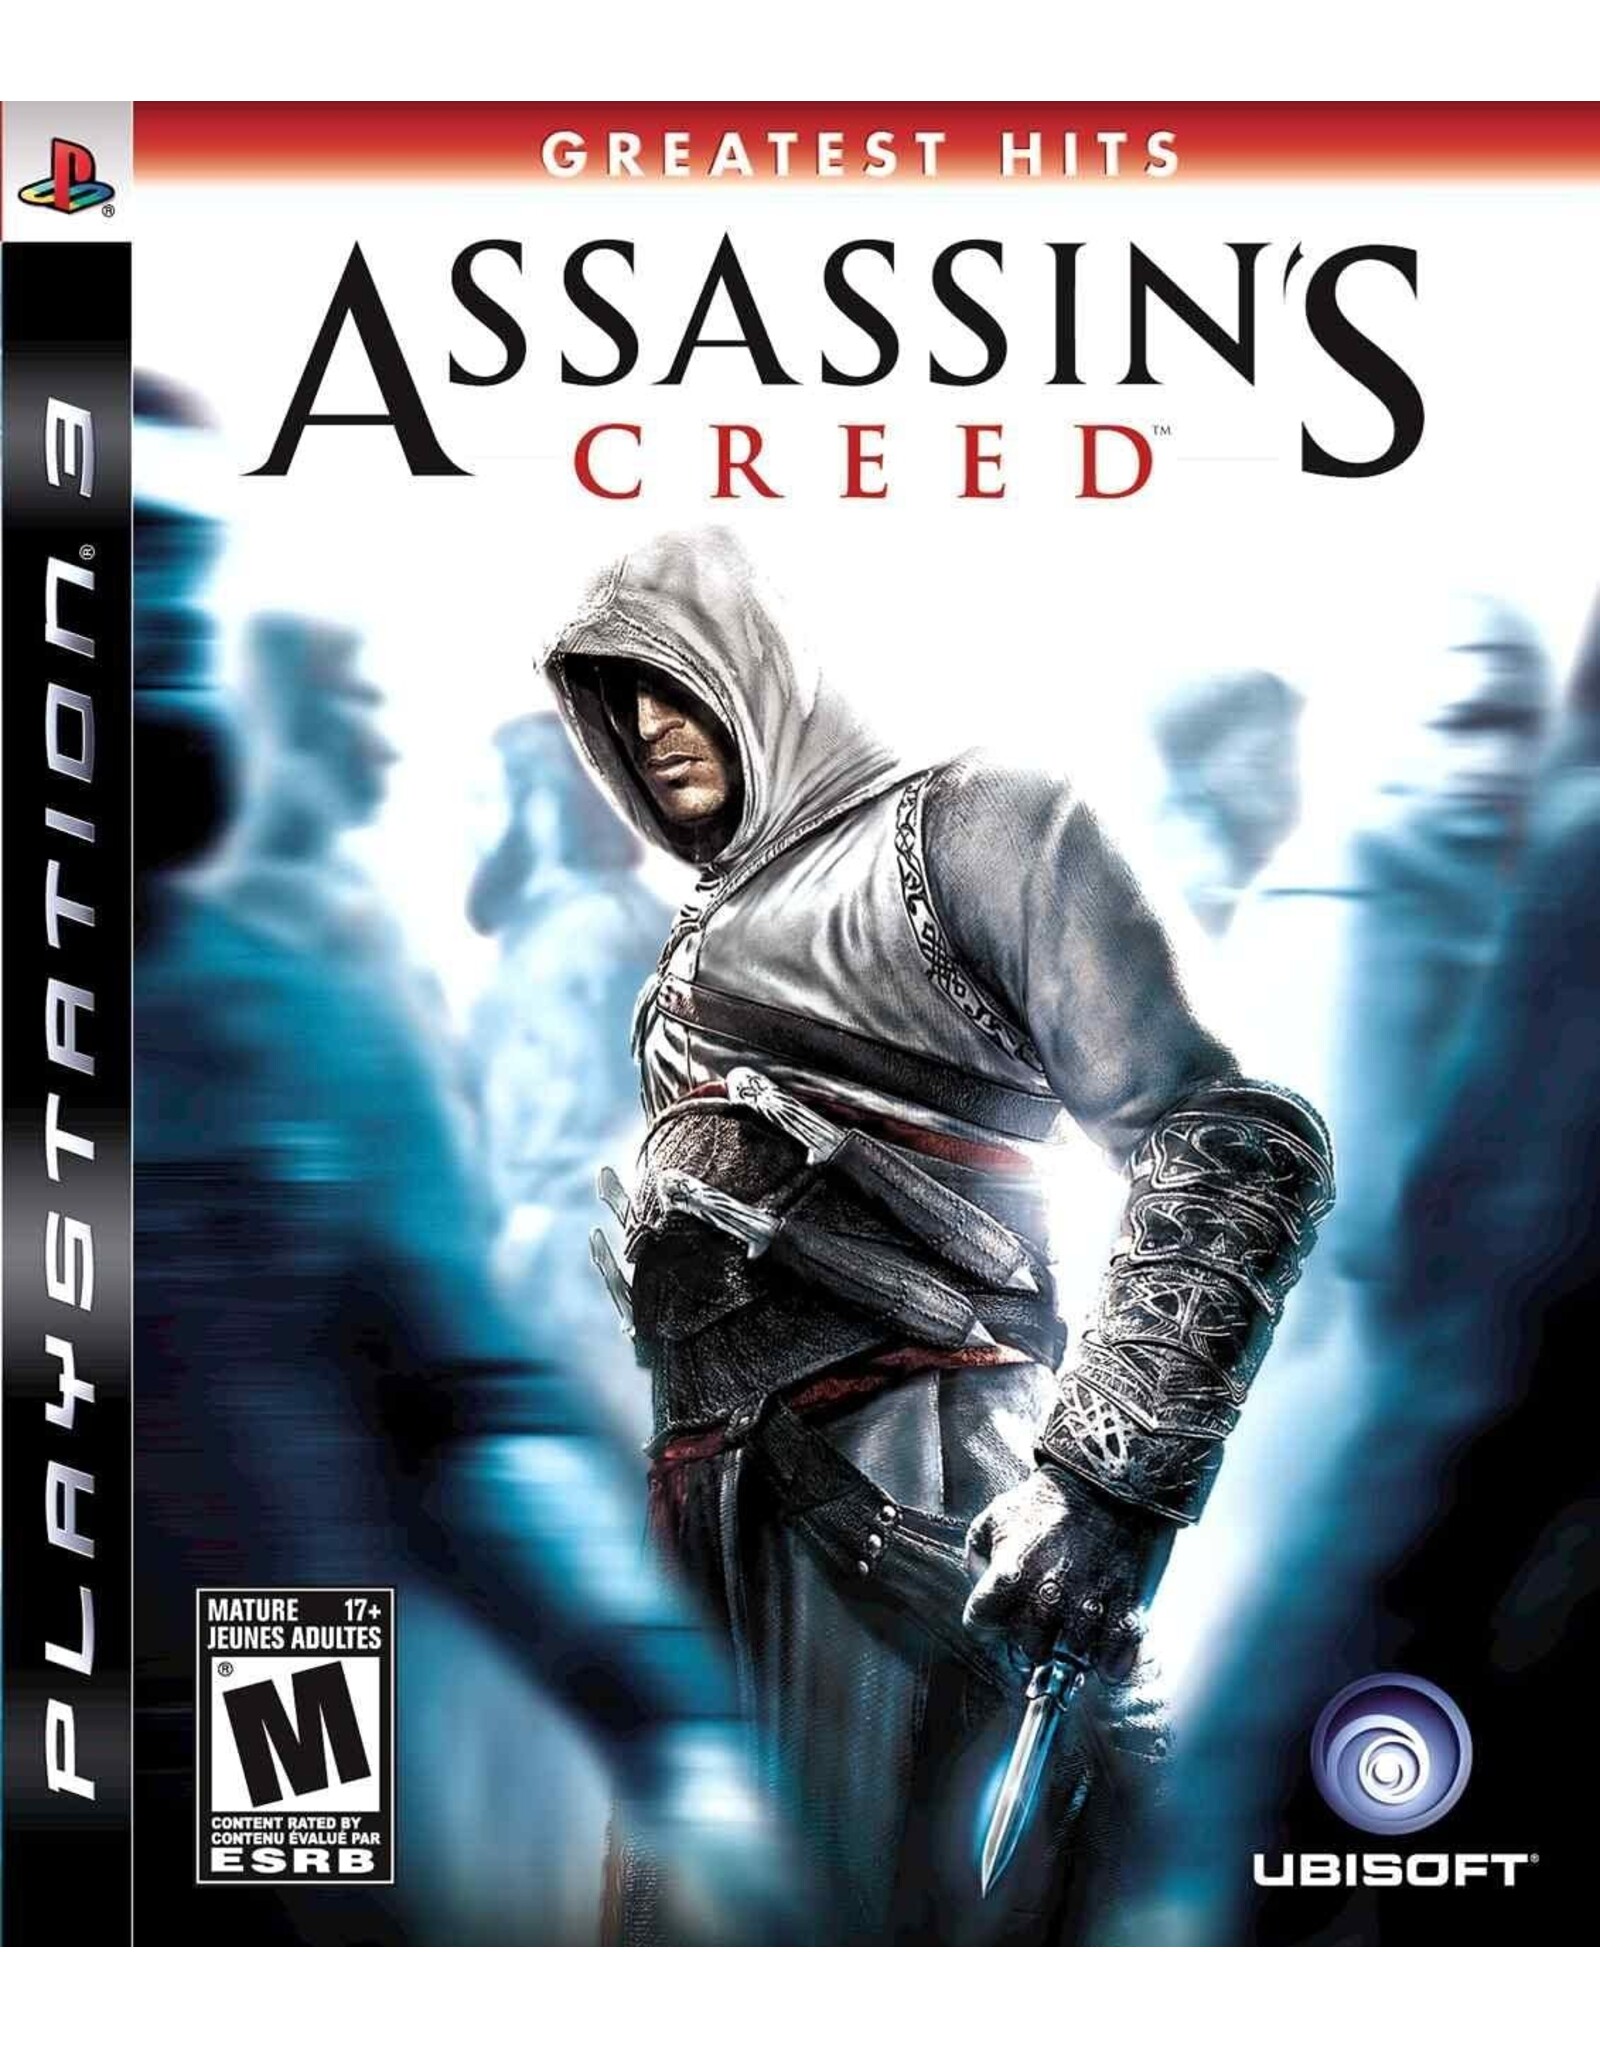 Playstation 3 Assassin's Creed (Greatest Hits, No Manual)